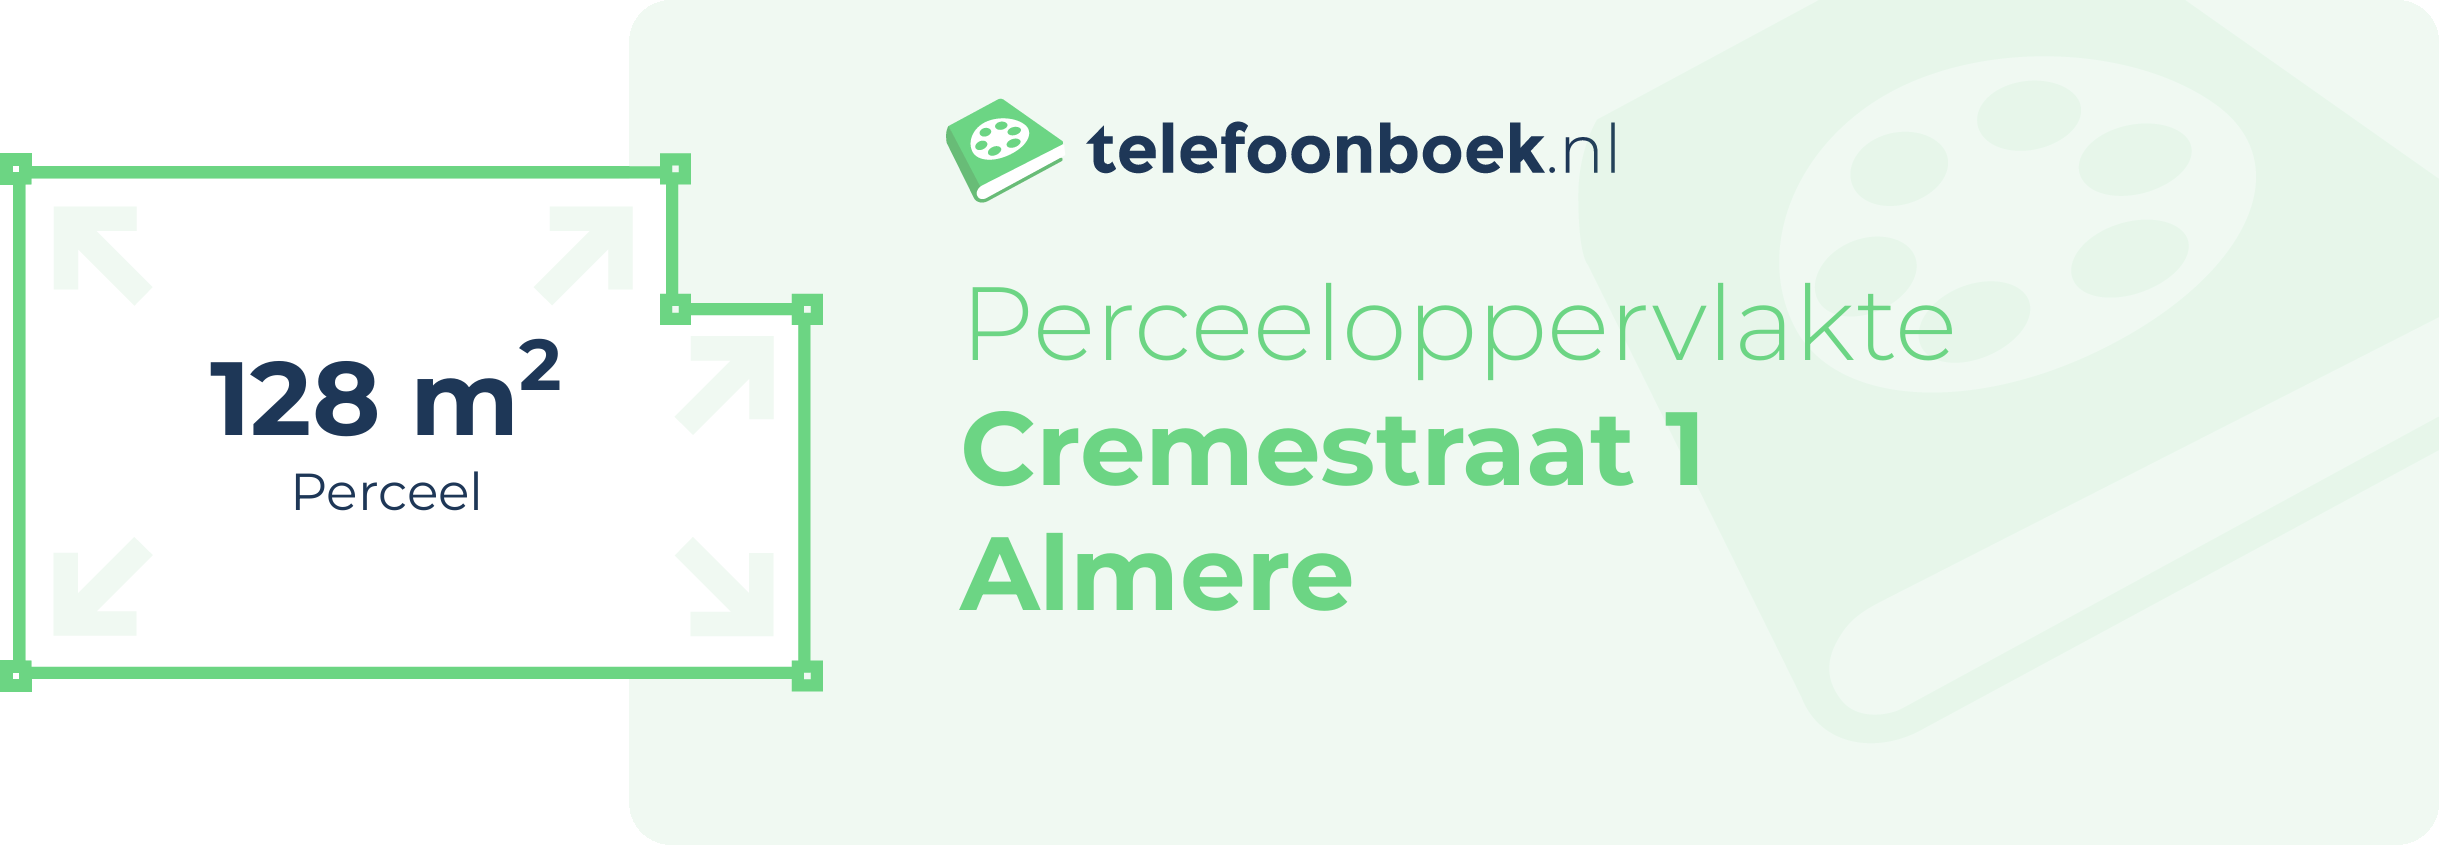 Perceeloppervlakte Cremestraat 1 Almere